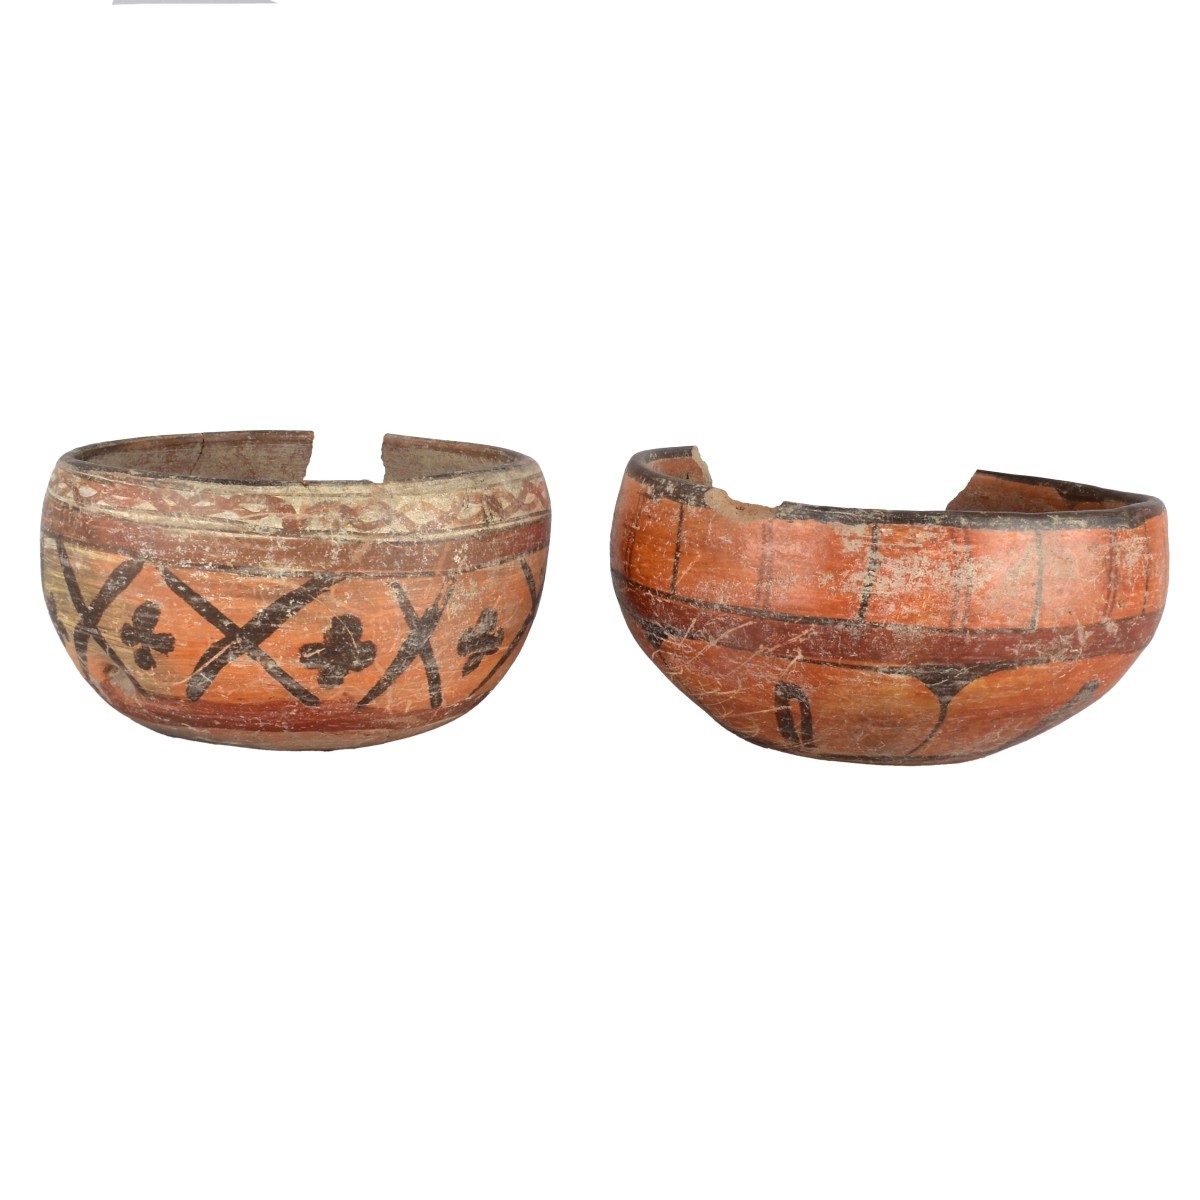 Two Pre Columbian Bowls